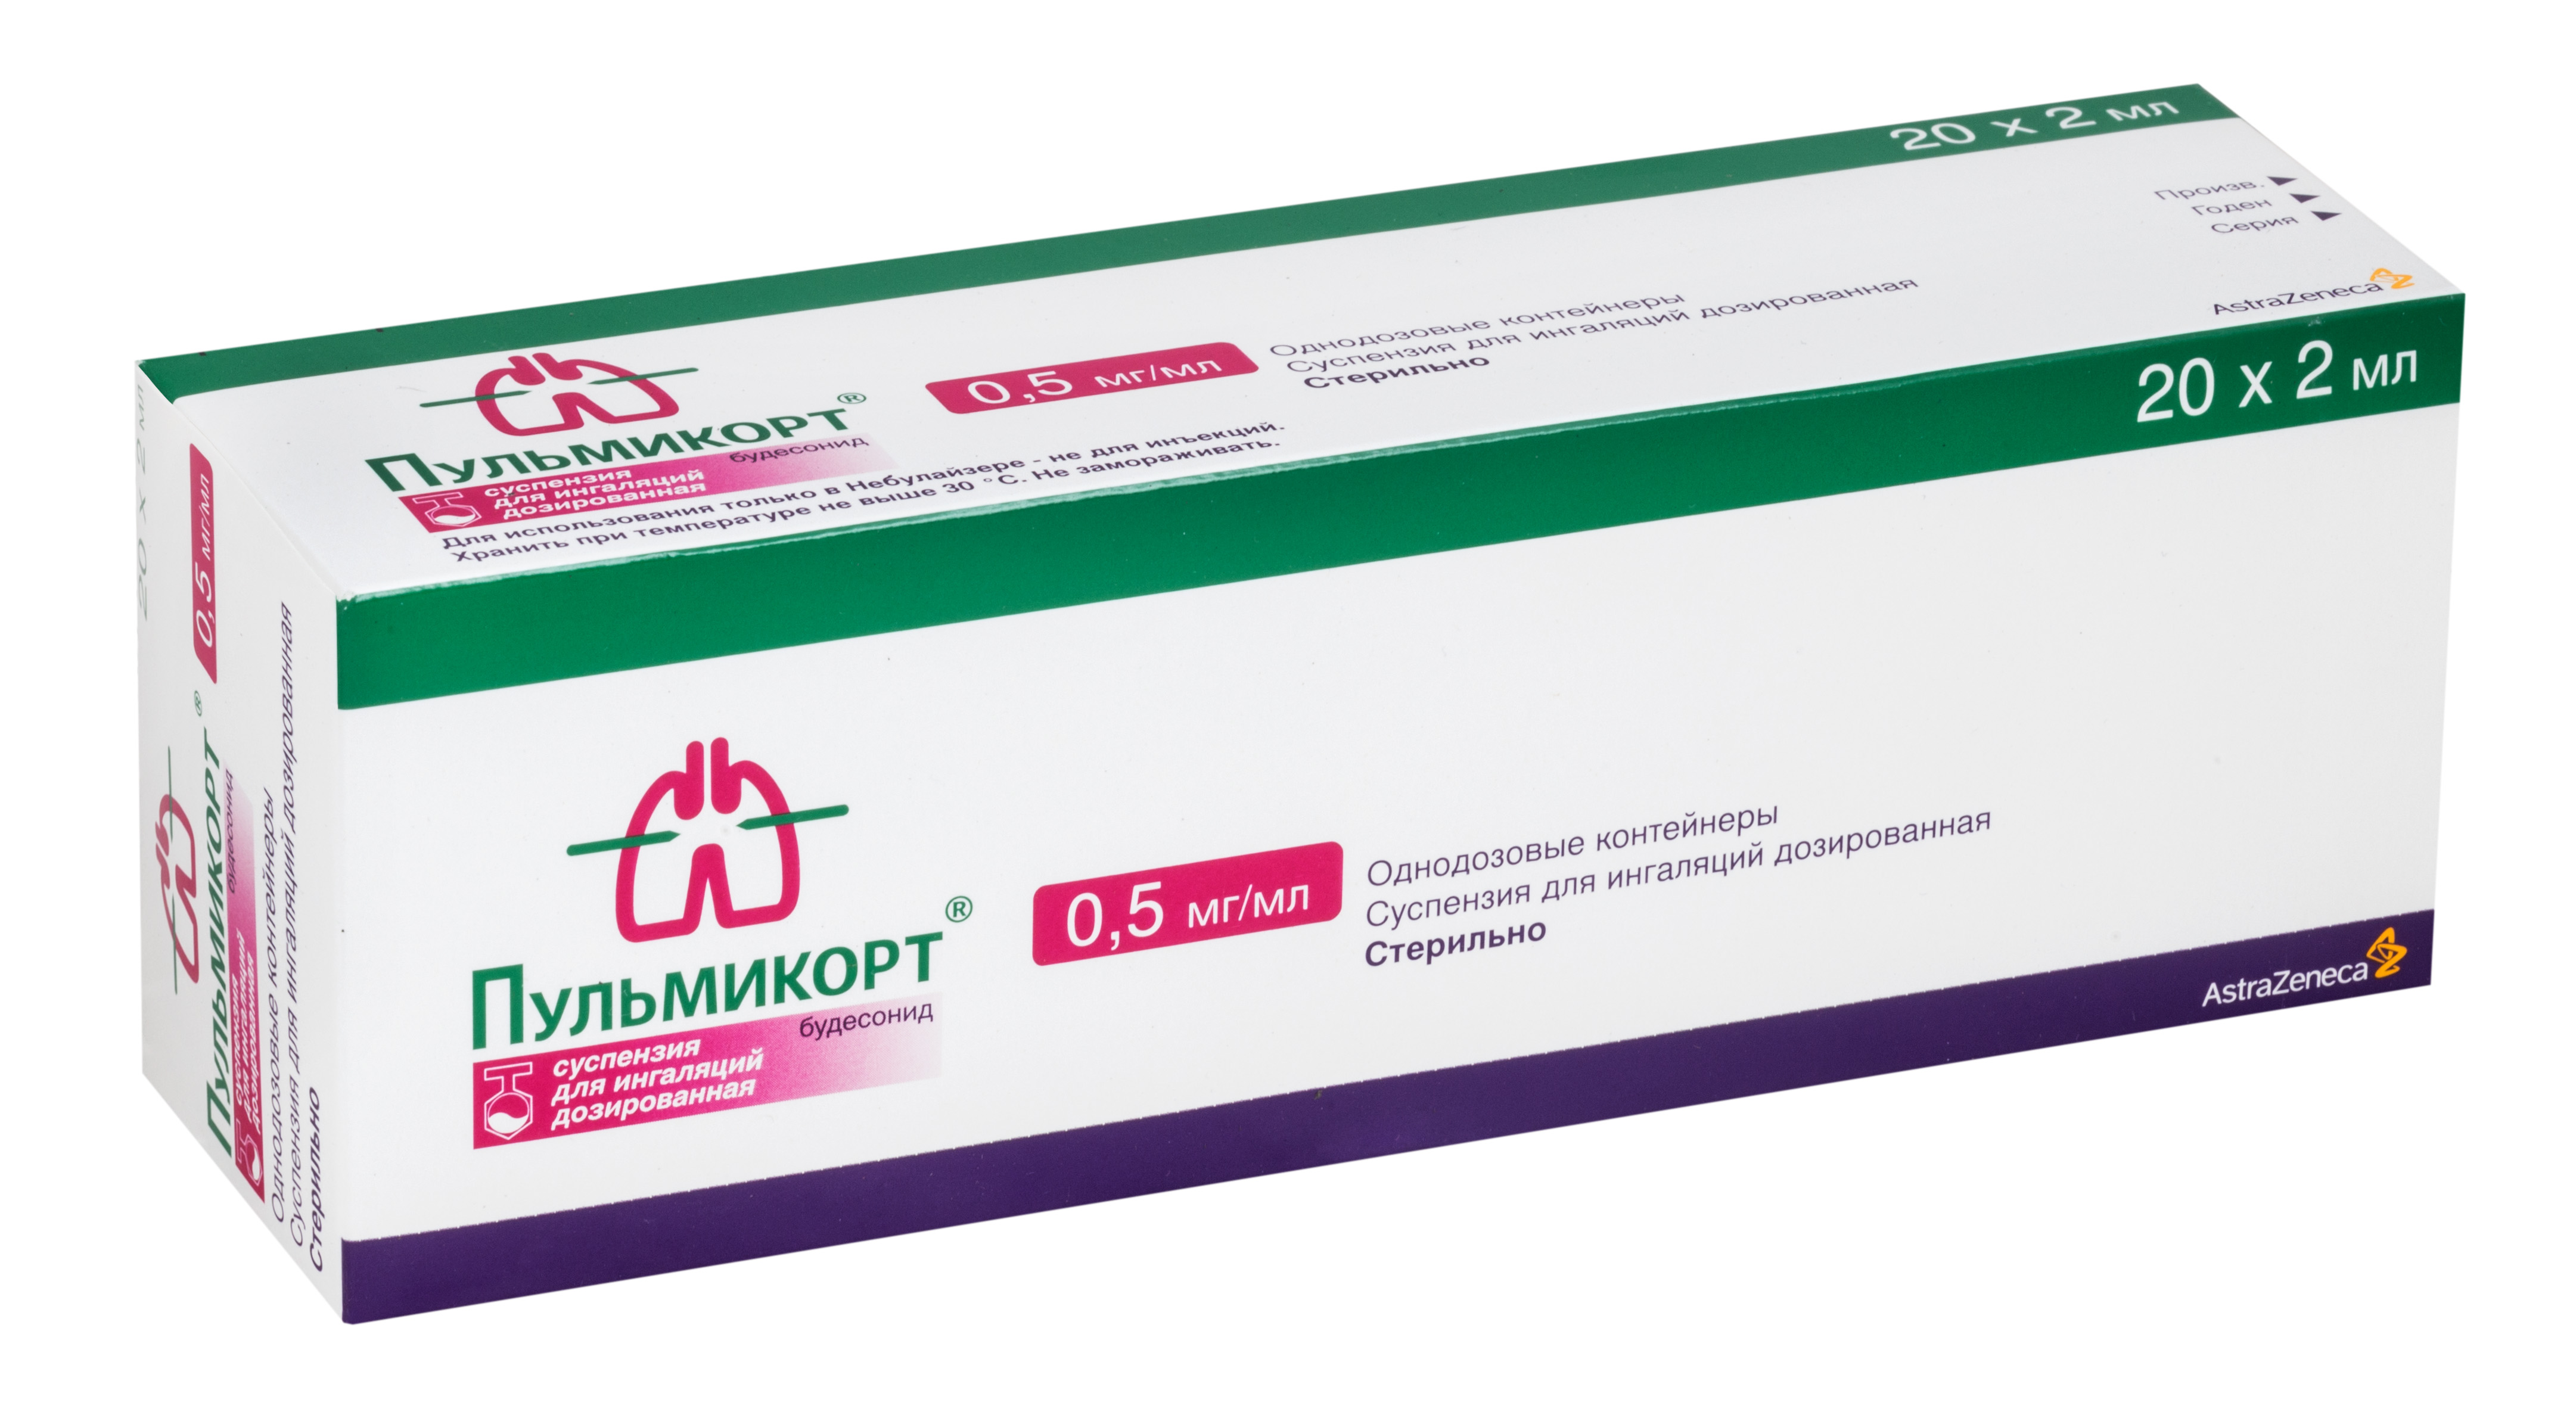 Пульмикорт суспензия для ингаляций 0, 5 мг/мл 20 шт., AstraZeneca AB  - купить